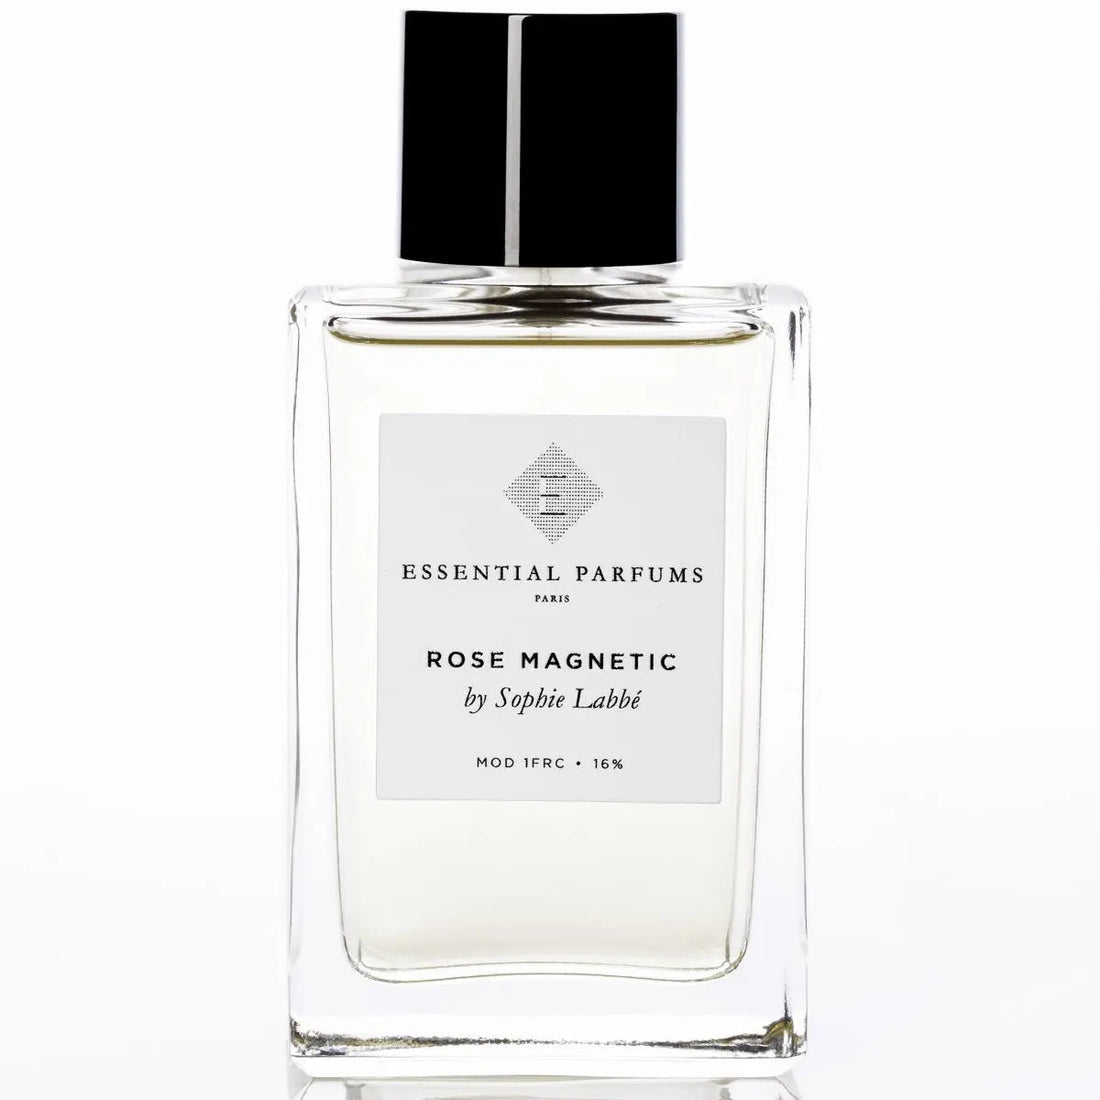 Essential parfums 玫瑰磁力香水 - 150 毫升补充装